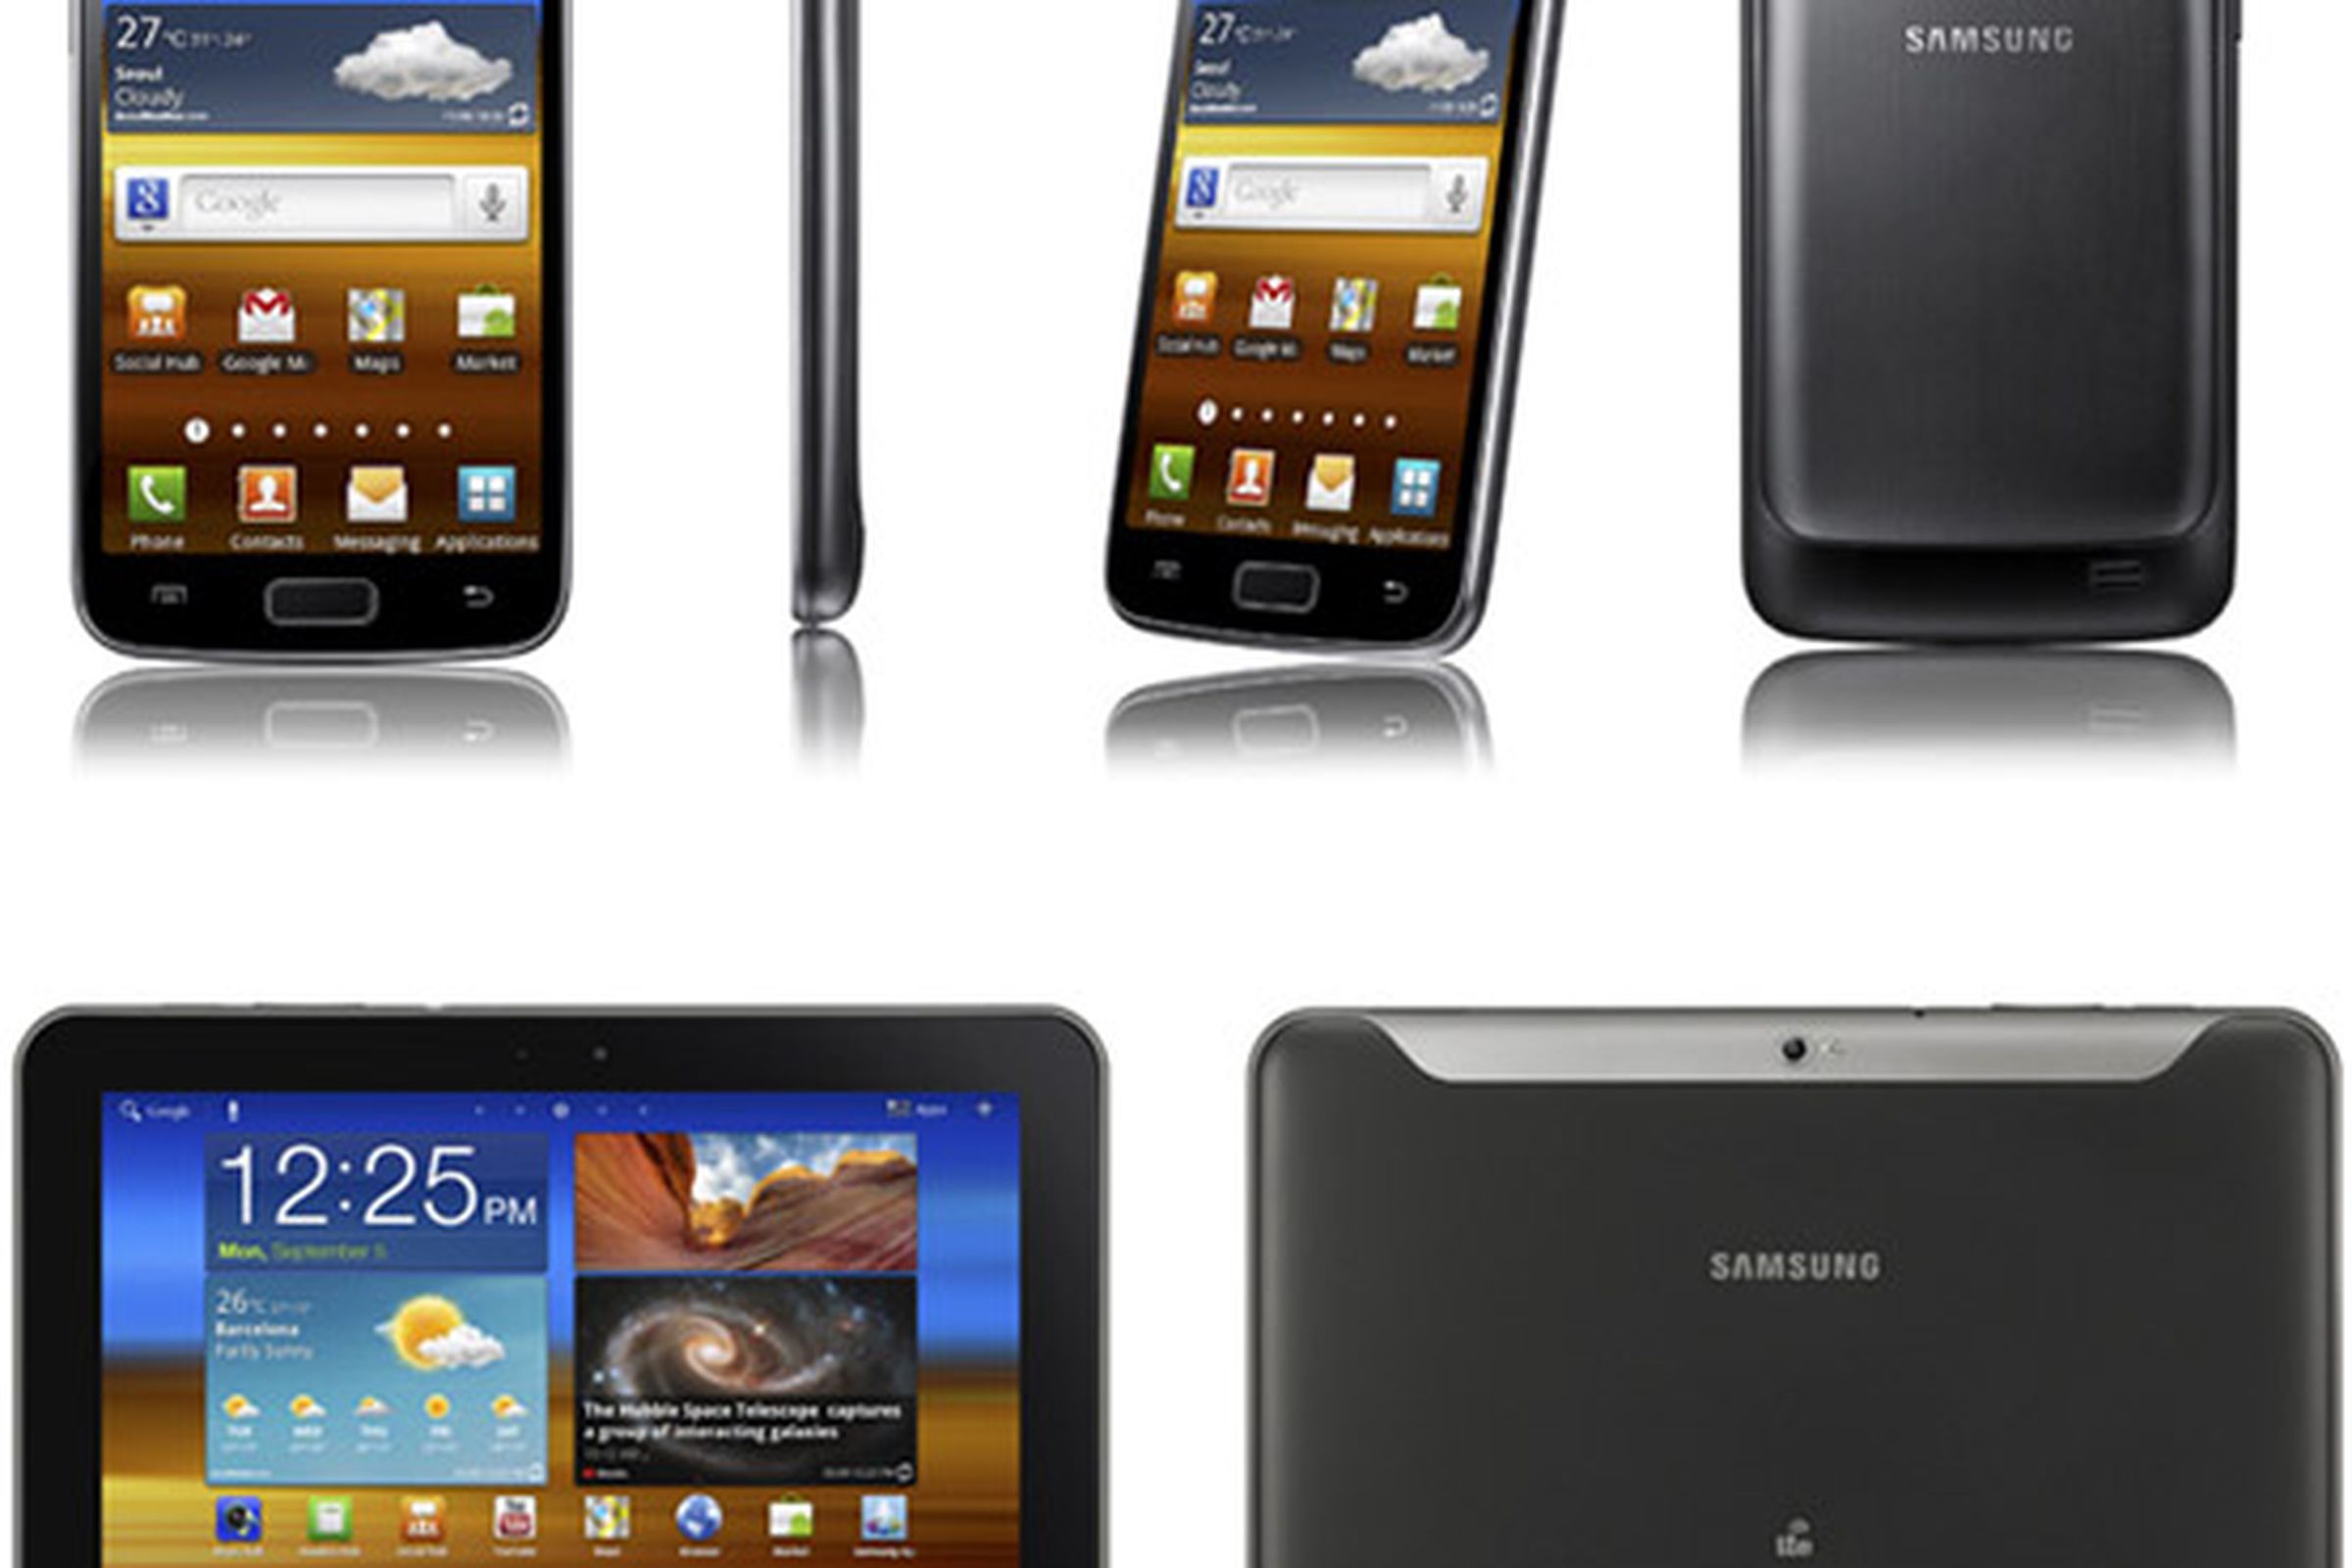 Samsung Galaxy S II and Galaxy Tab 8.9 with LTE